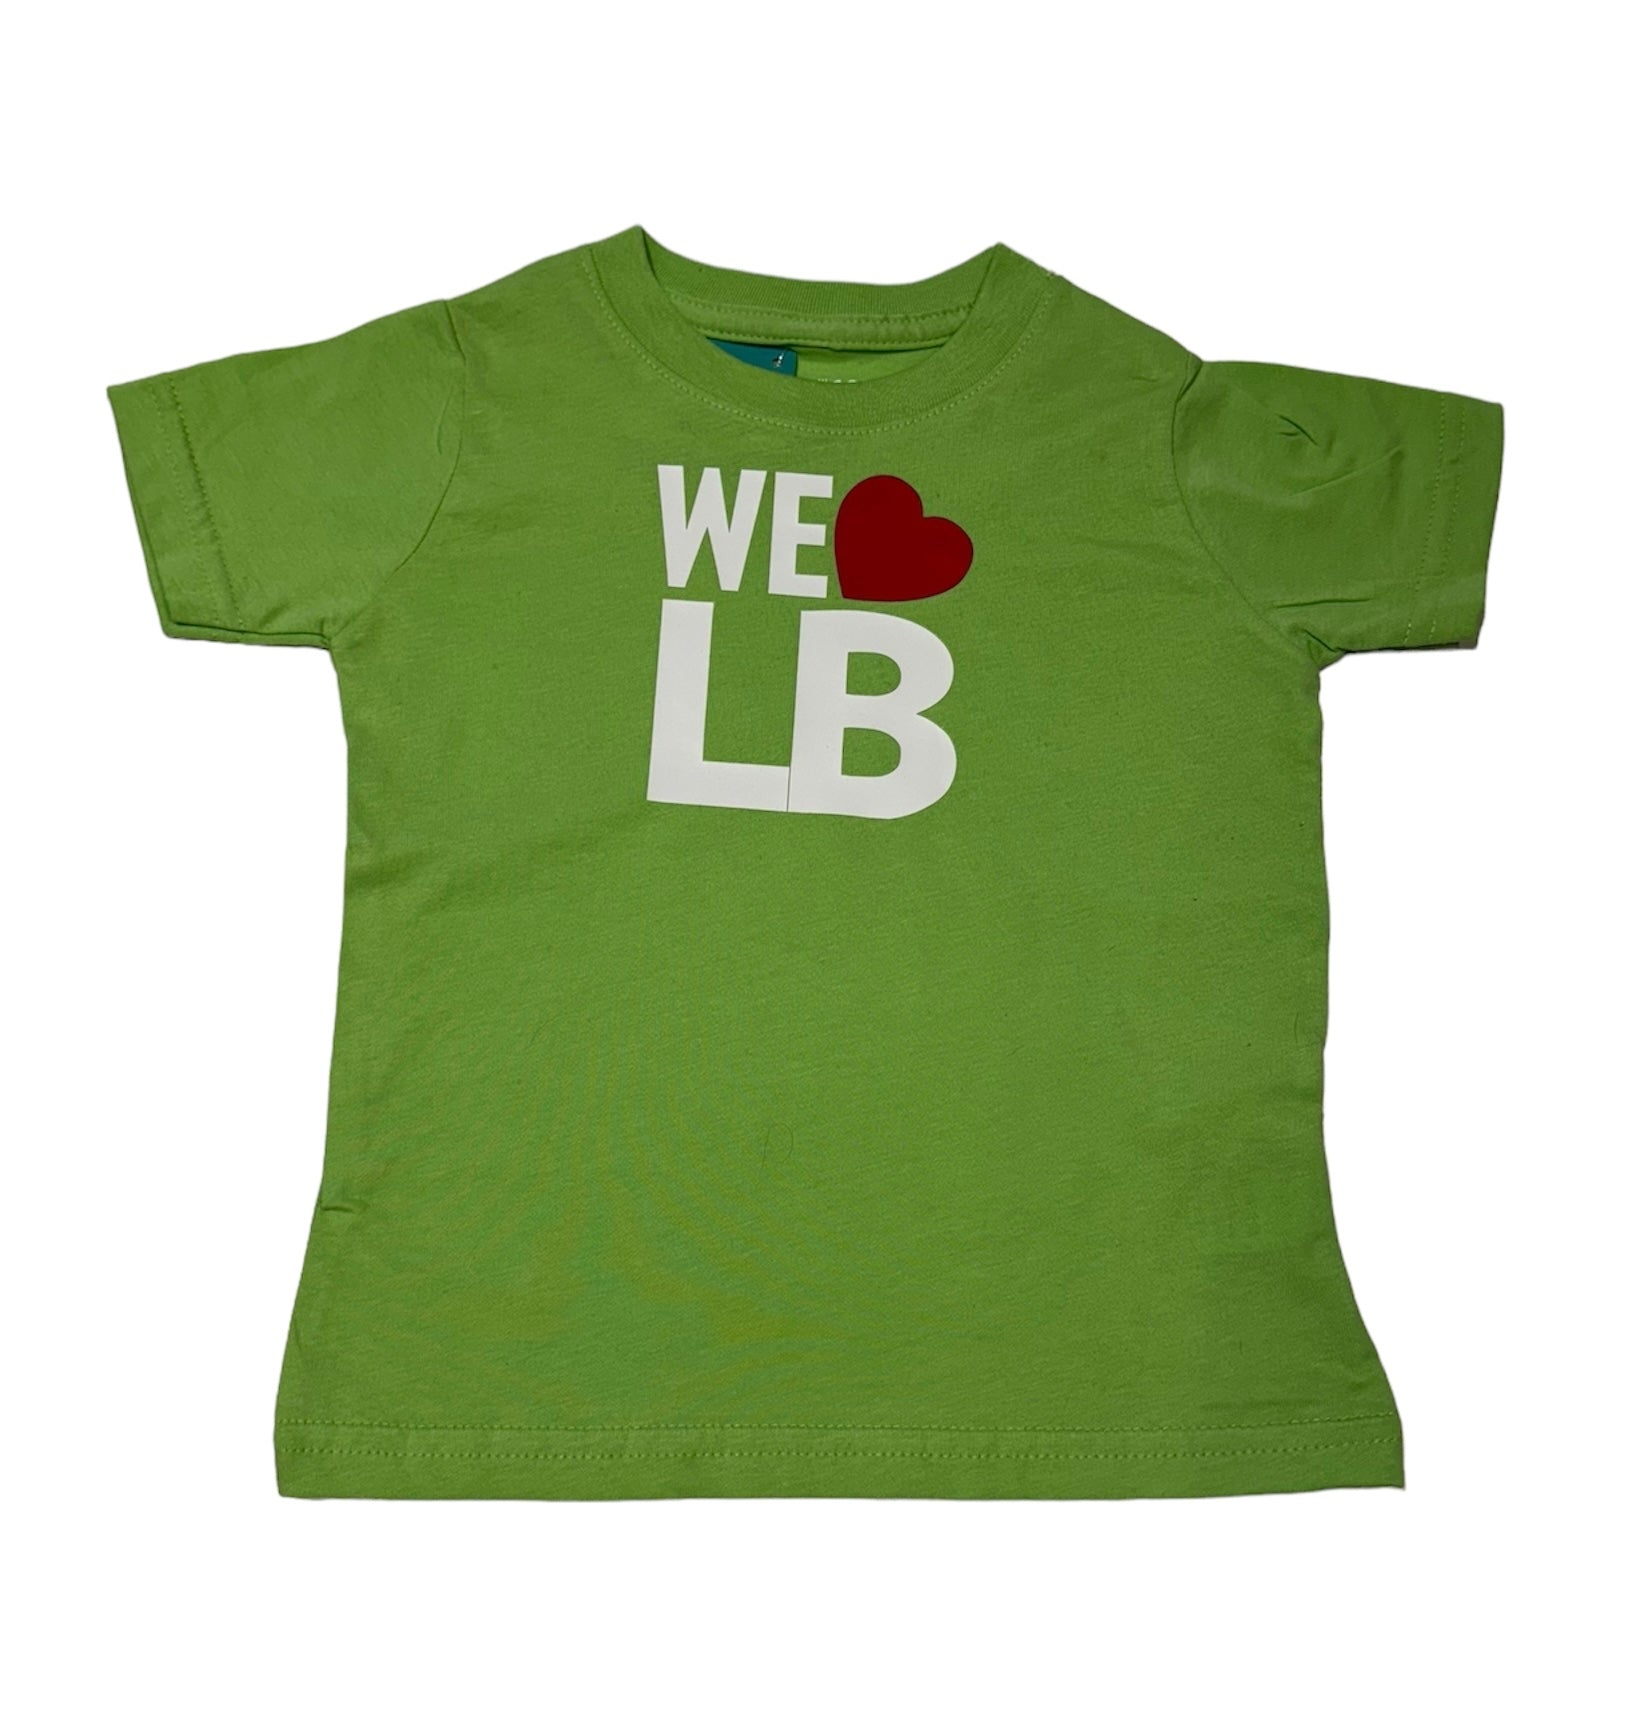 We Love LB Classic Logo Toddler Tee